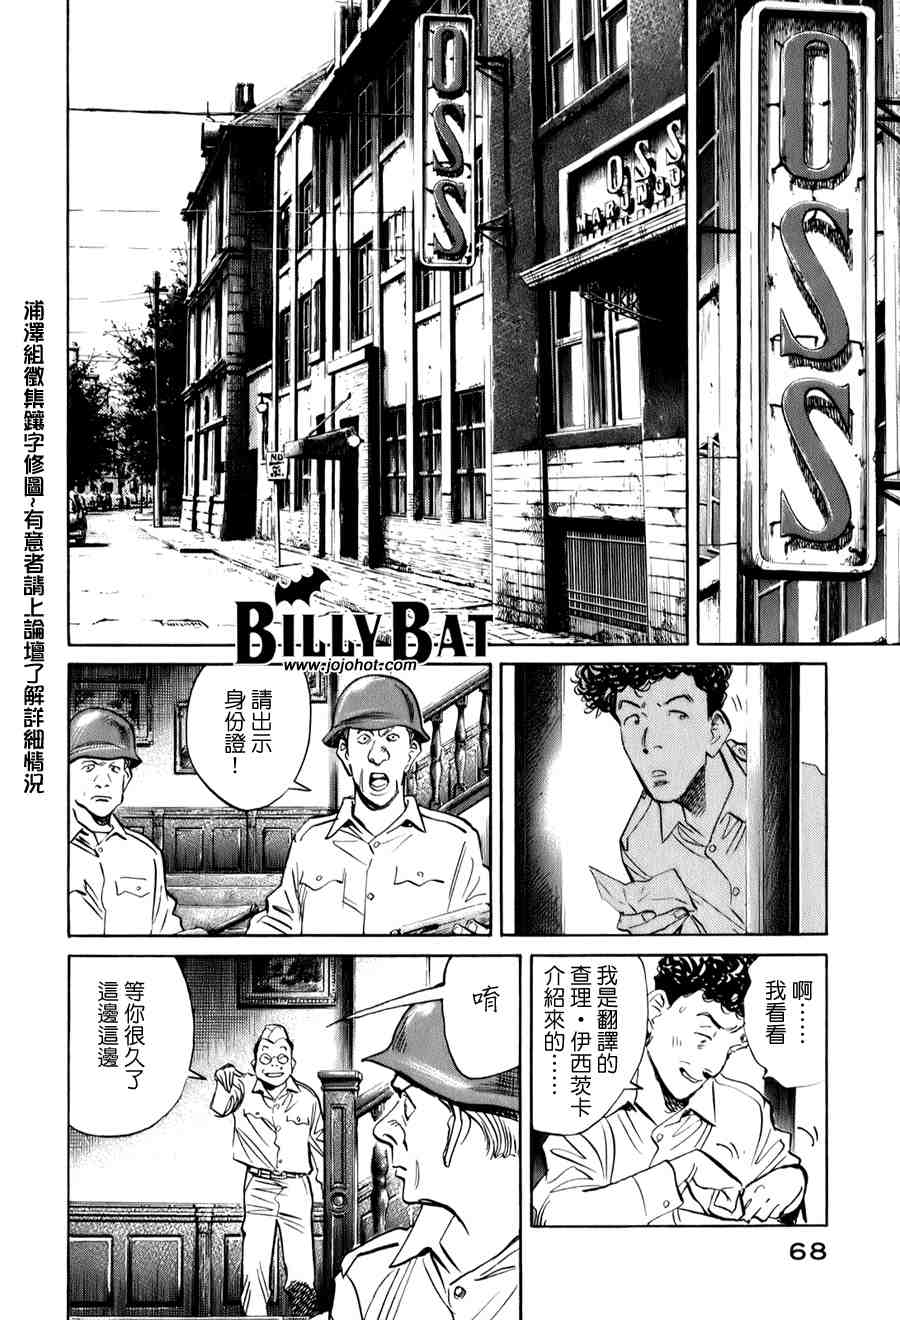 Billy_Bat - 第1卷(2/4) - 6